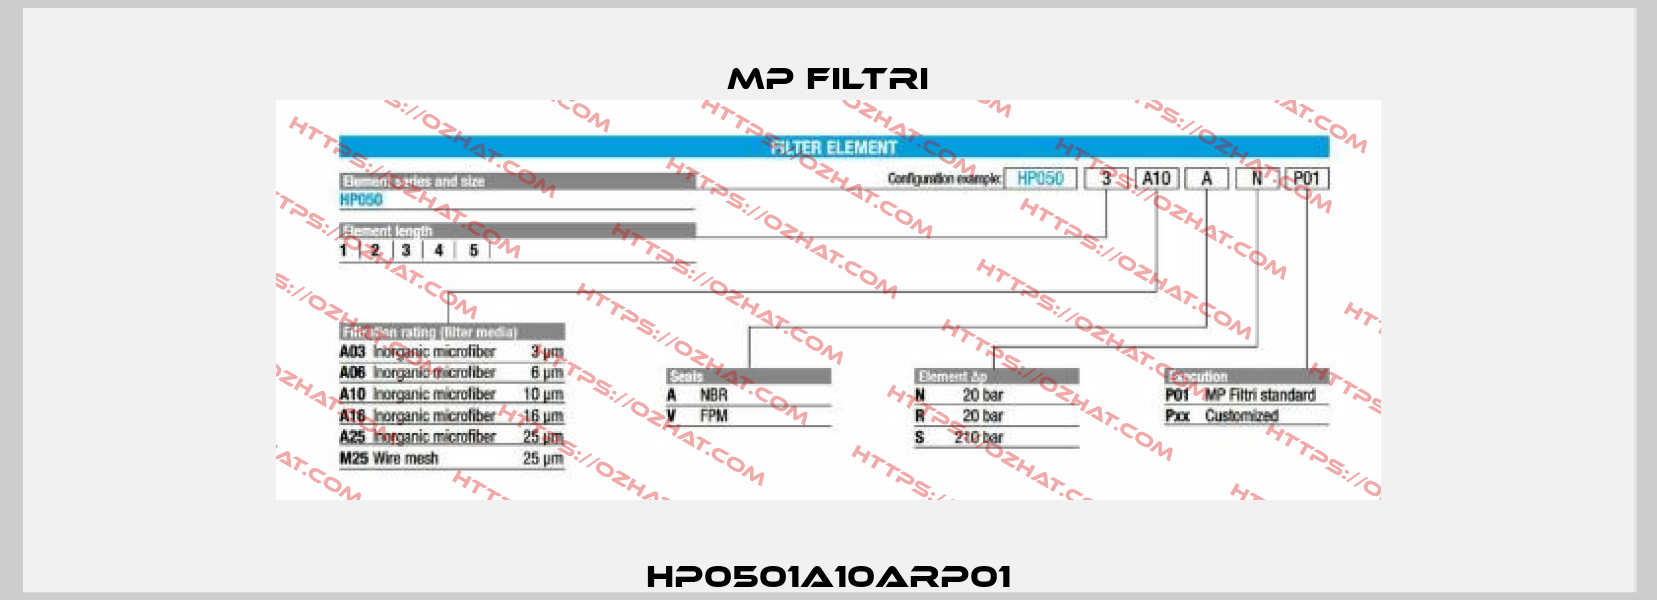 HP0501A10ARP01 MP Filtri